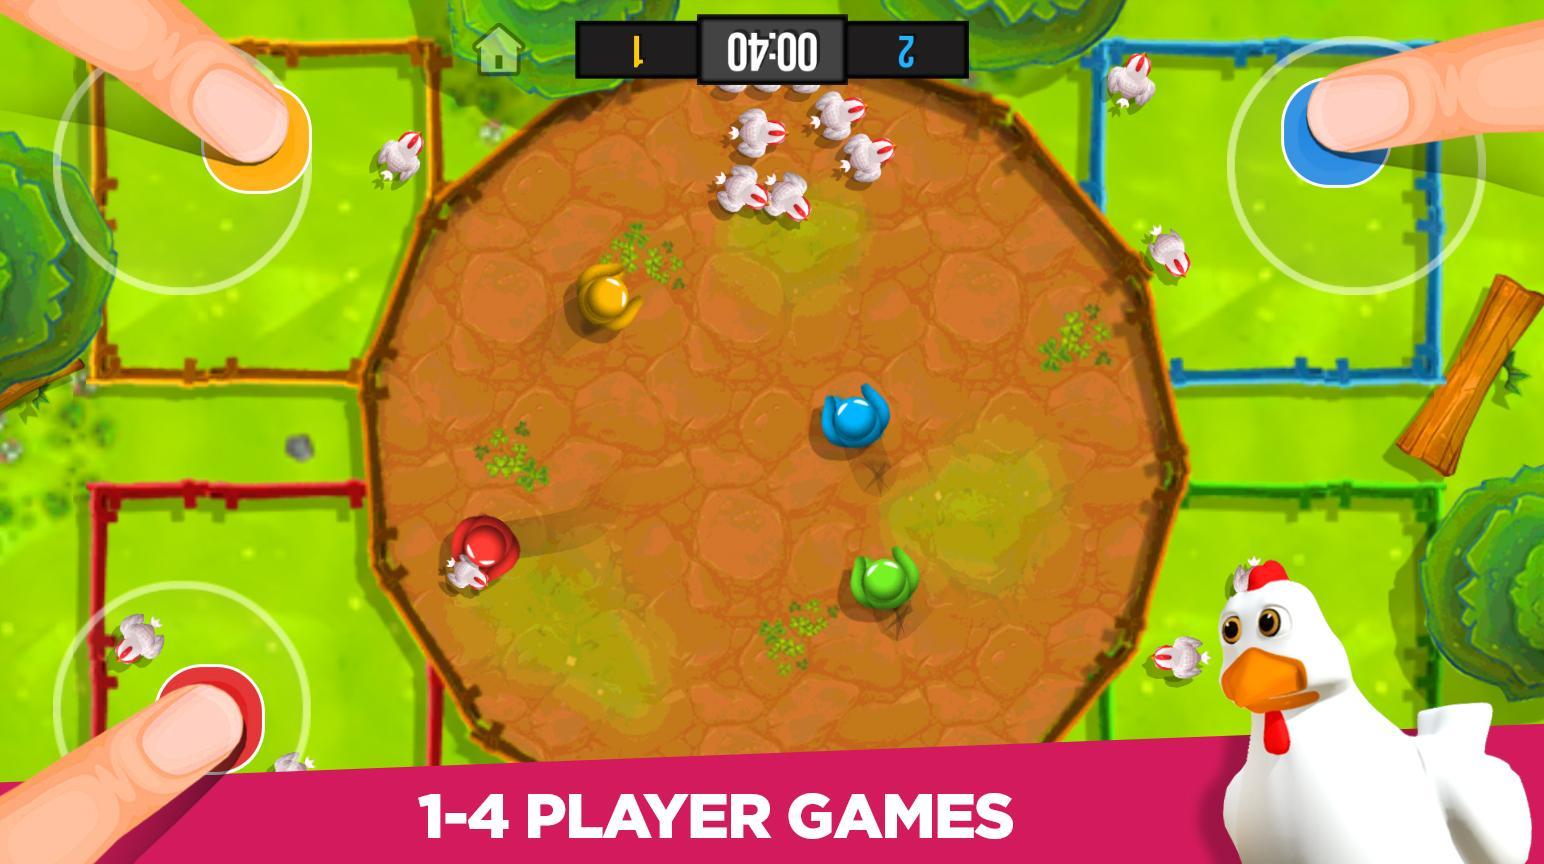 Stickman Party 1 2 3 4 Player Games Free 1.9.6.2 Screenshot 6